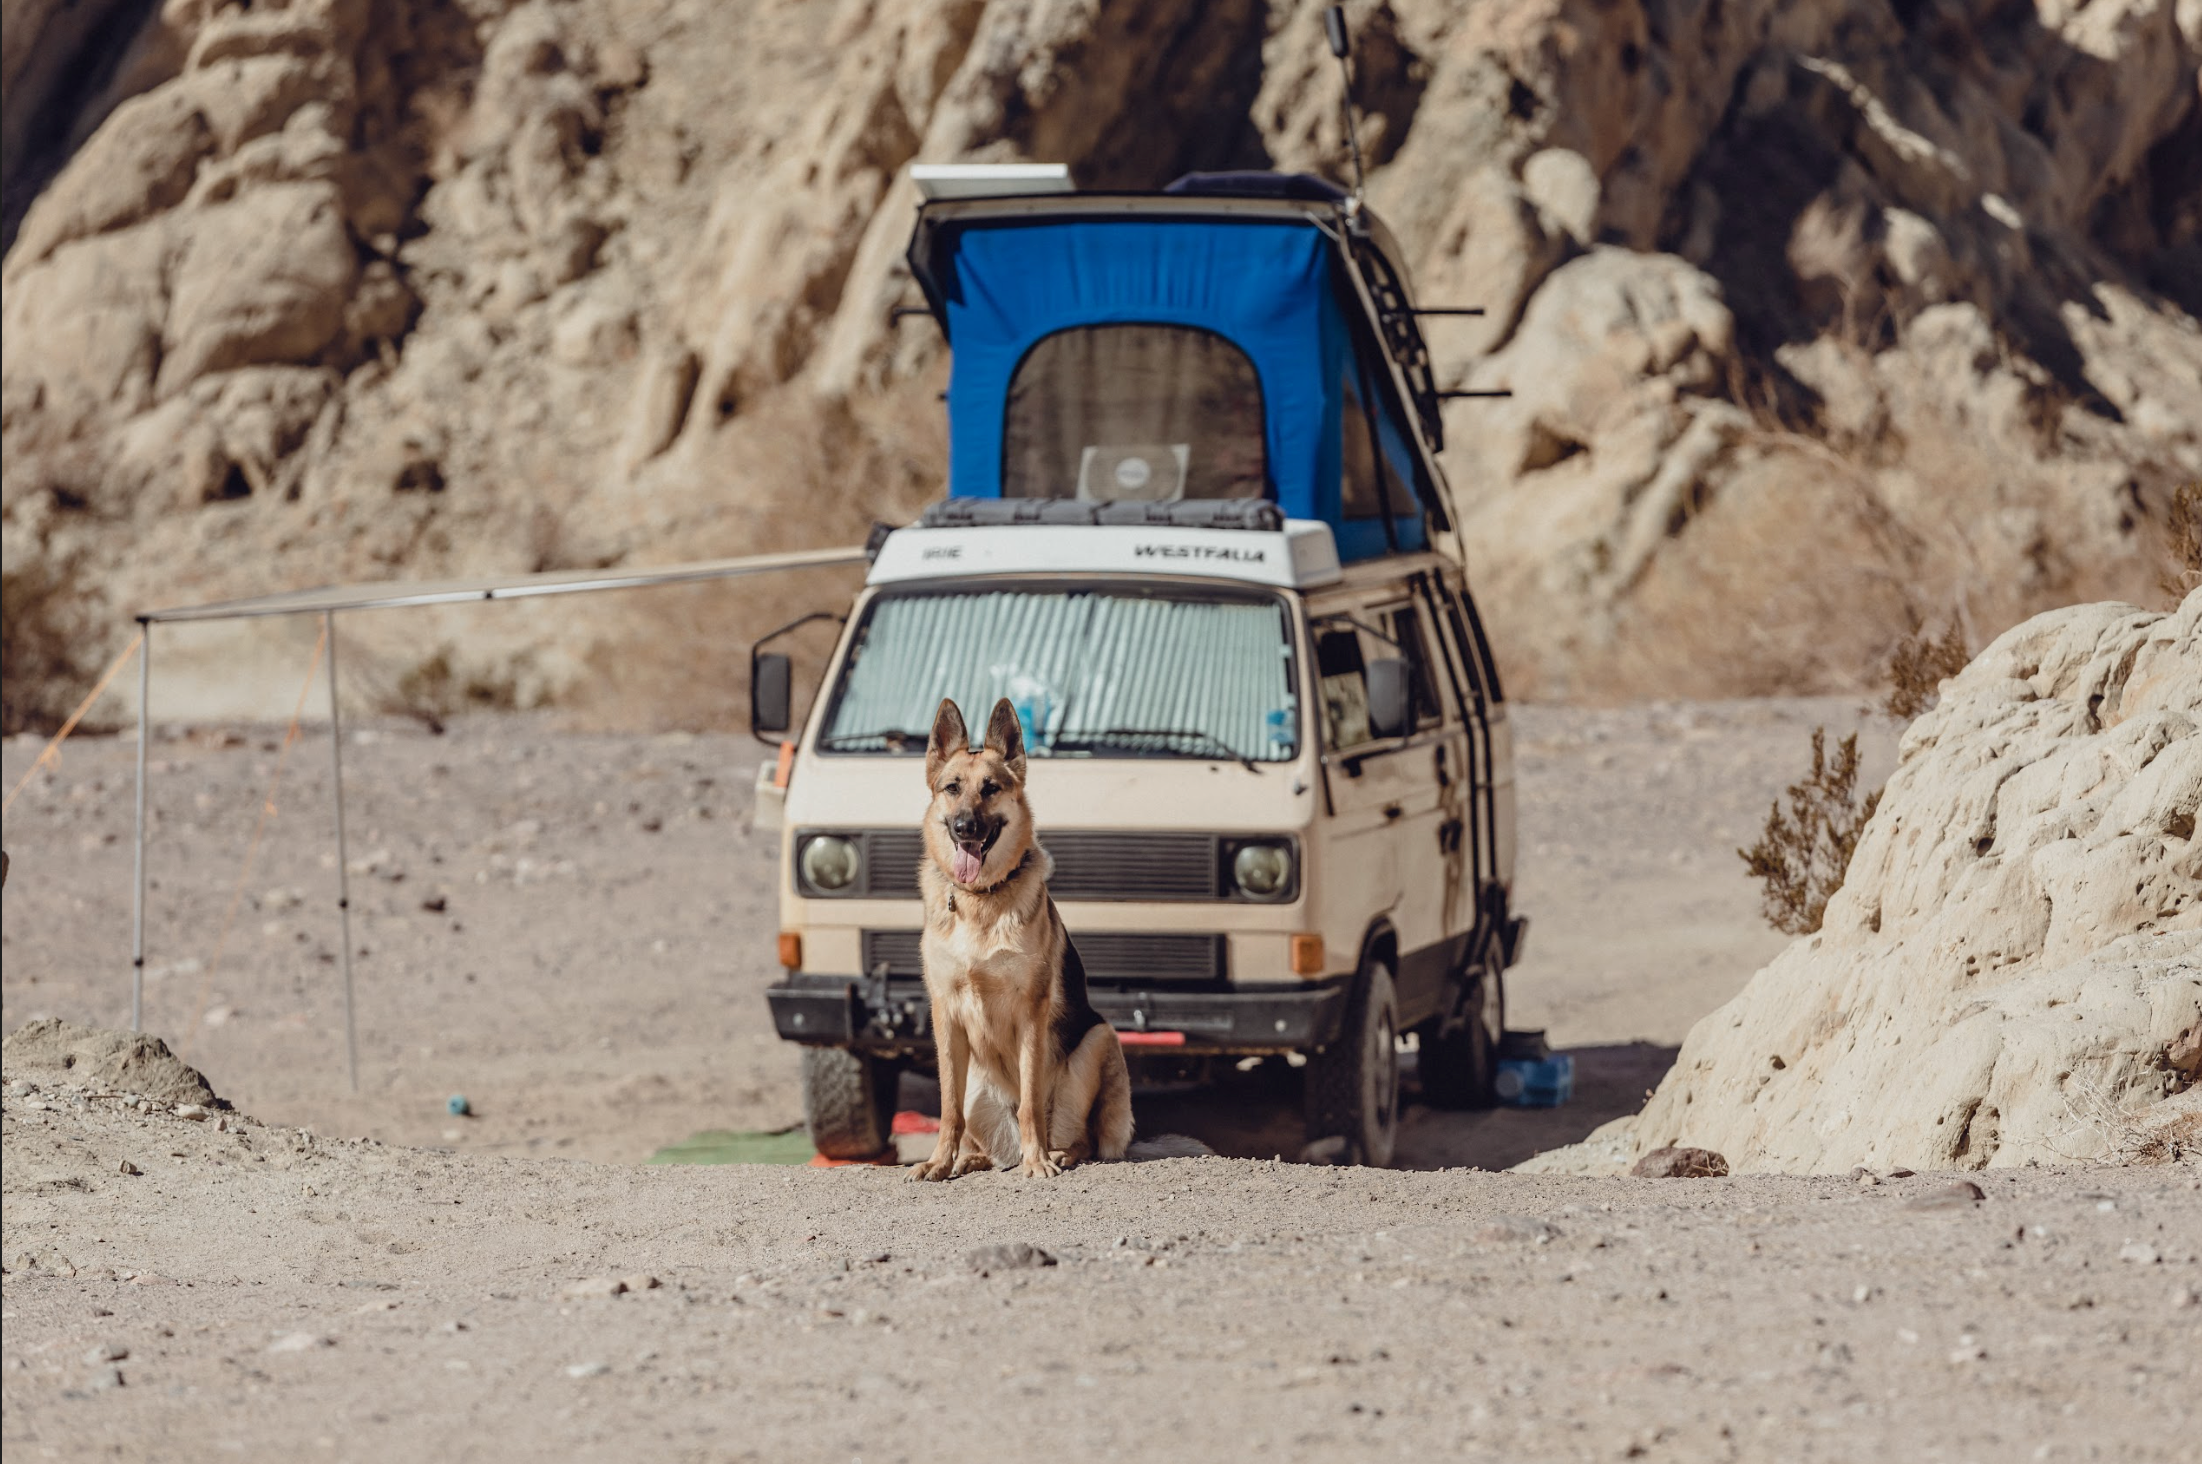 Amara, a German Shepherd Dog, sitting in front of a camper van in the desert